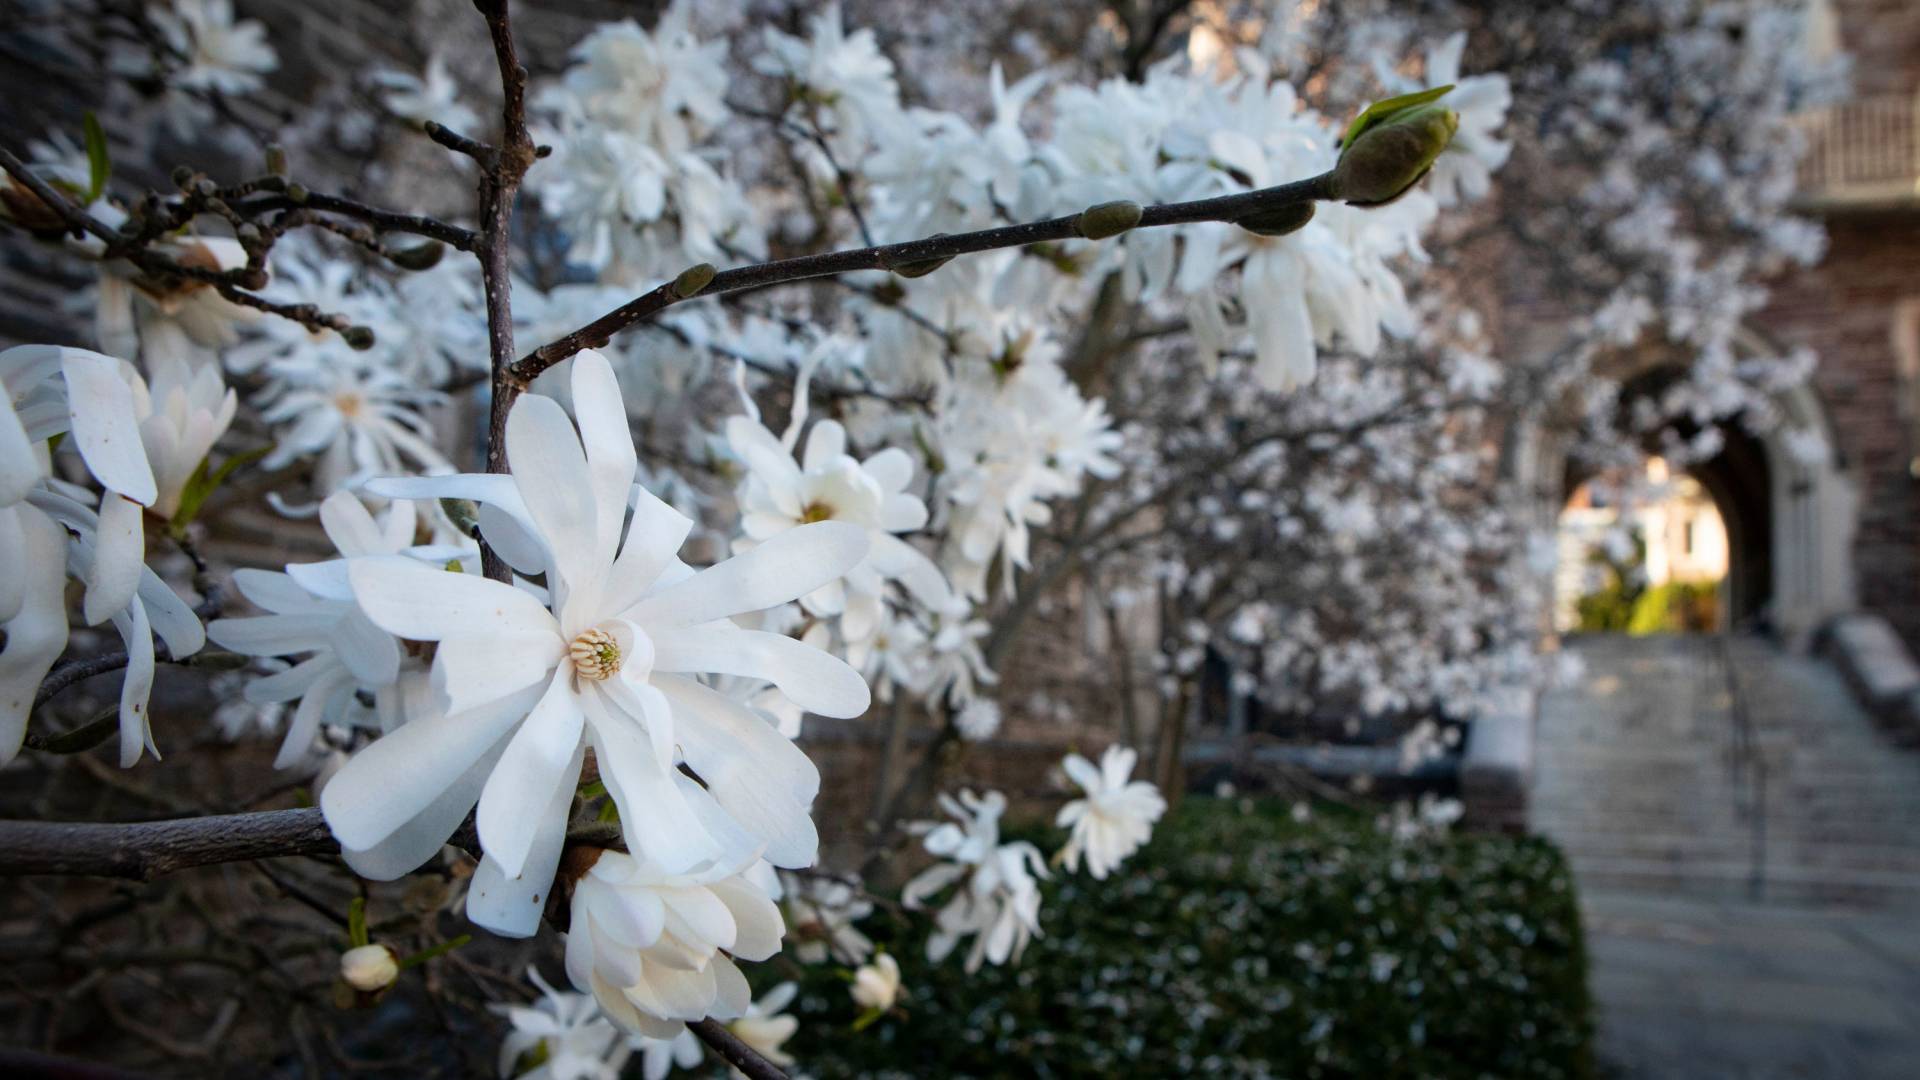 Magnolias bloom on campus